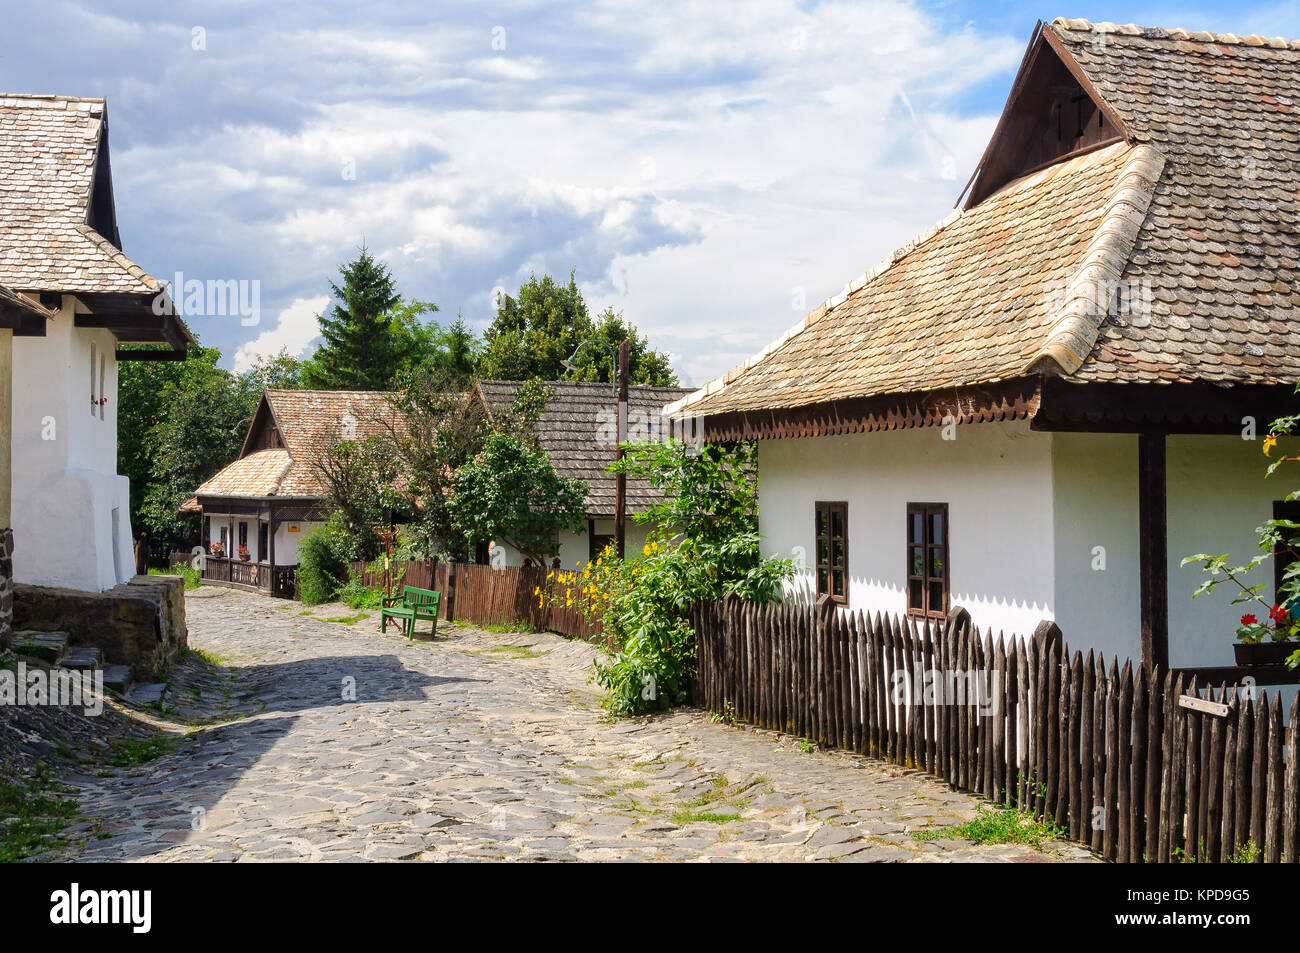 Petofi Sandor Street in Holloko, a UNESCO World Heritage village of Hungary Stock Photo